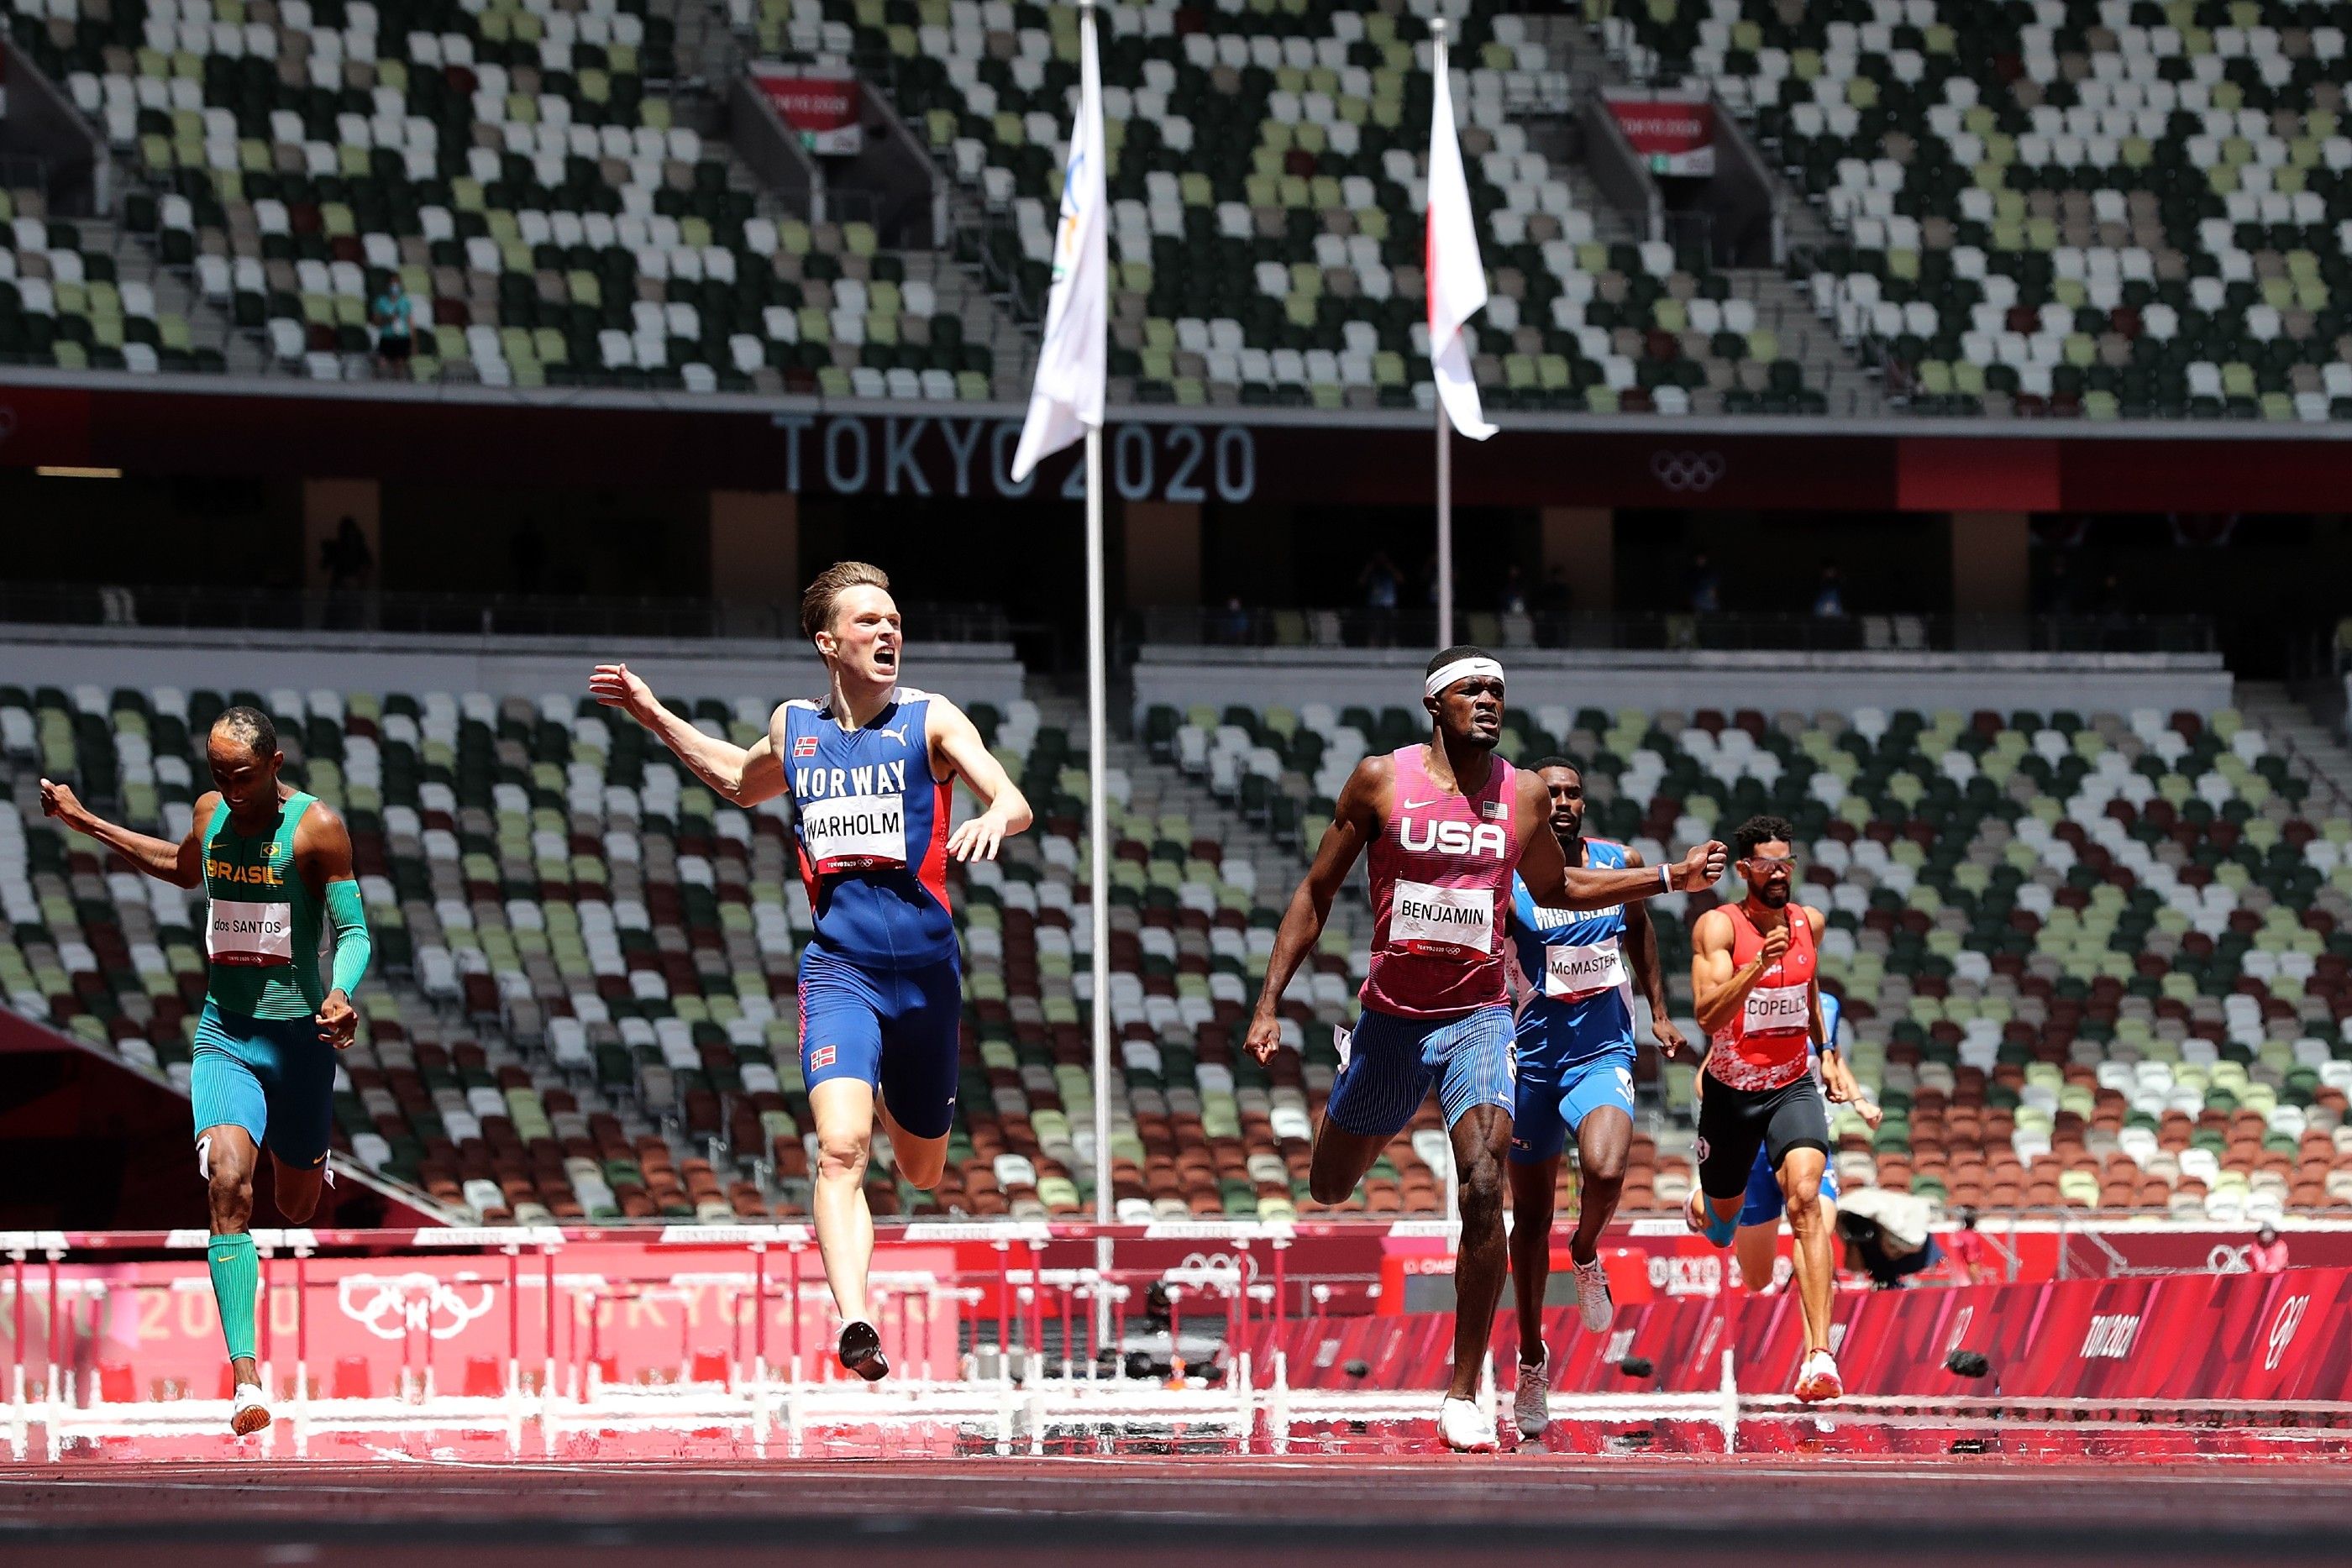 Karsten Warholm breaks the world 400m hurdles record to win Olympic gold ahead of Rai Benjamin and Alison dos Santos